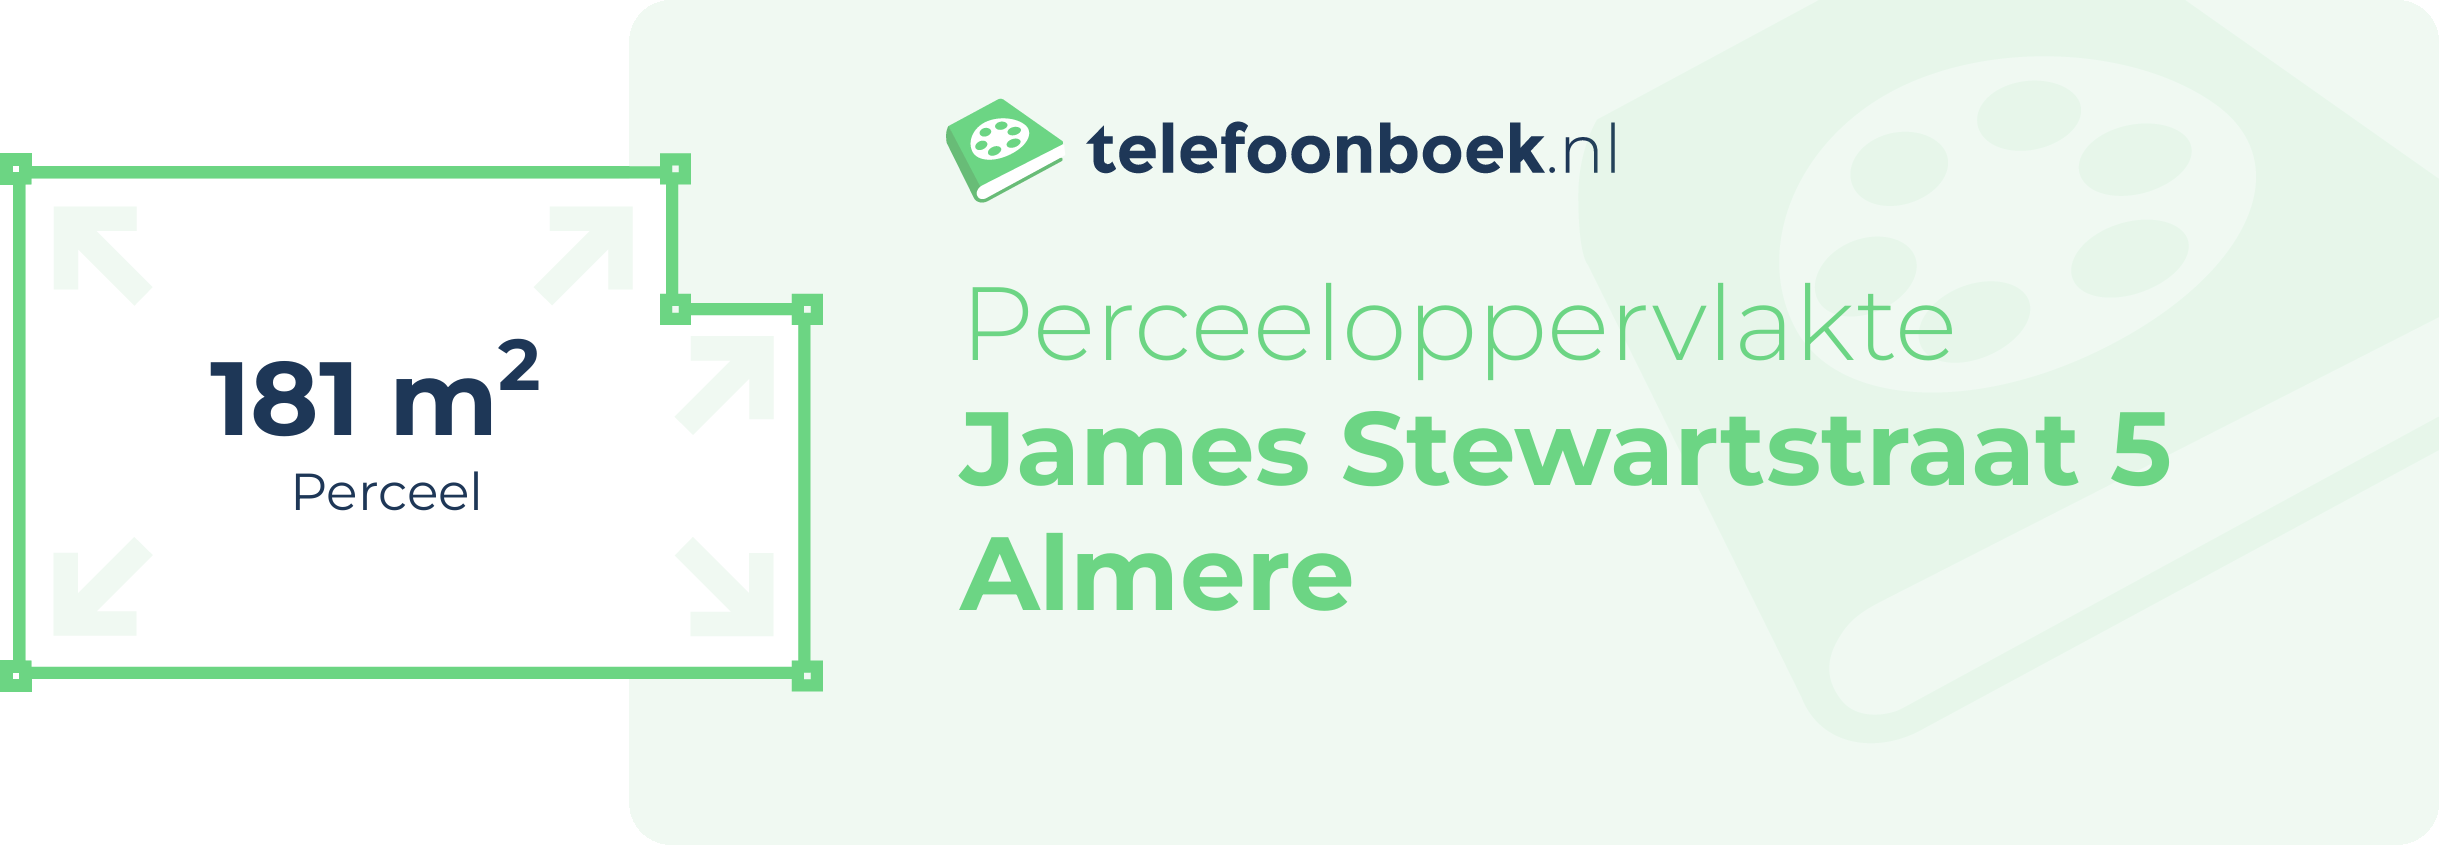 Perceeloppervlakte James Stewartstraat 5 Almere